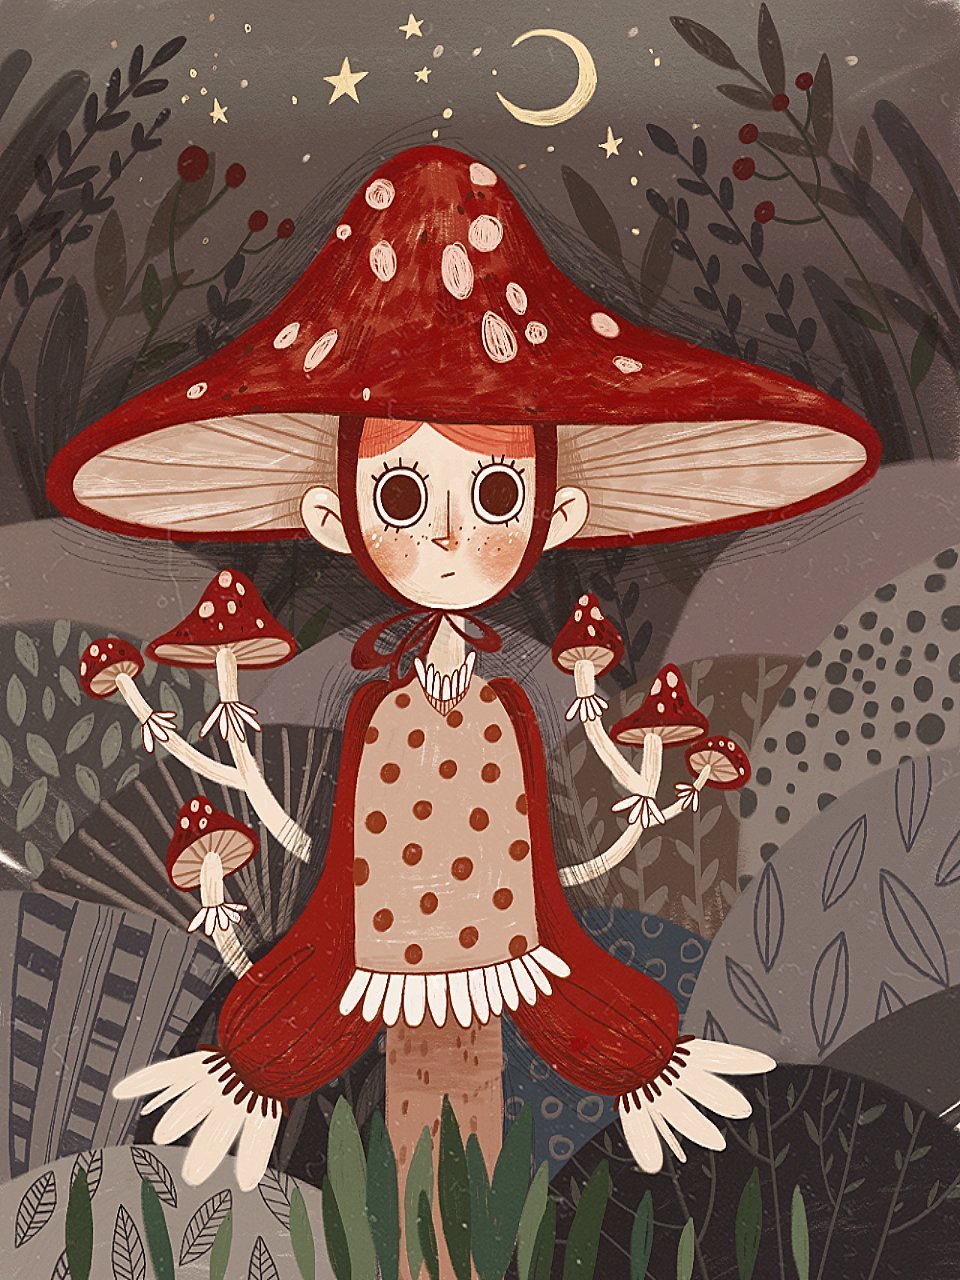 Рисунки грибов